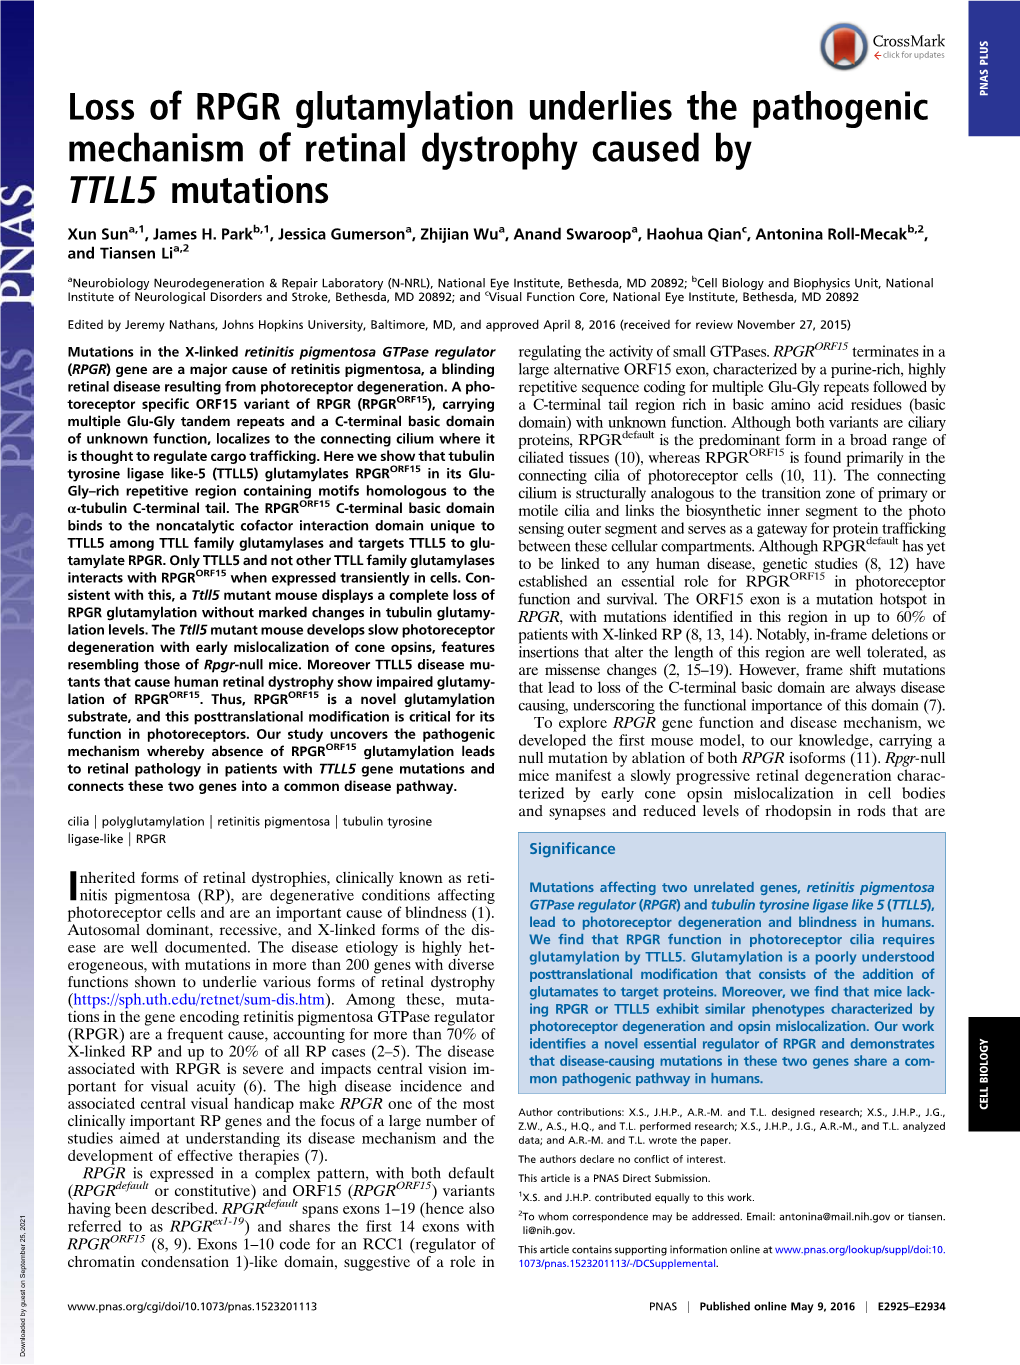 Loss of RPGR Glutamylation Underlies the Pathogenic Mechanism